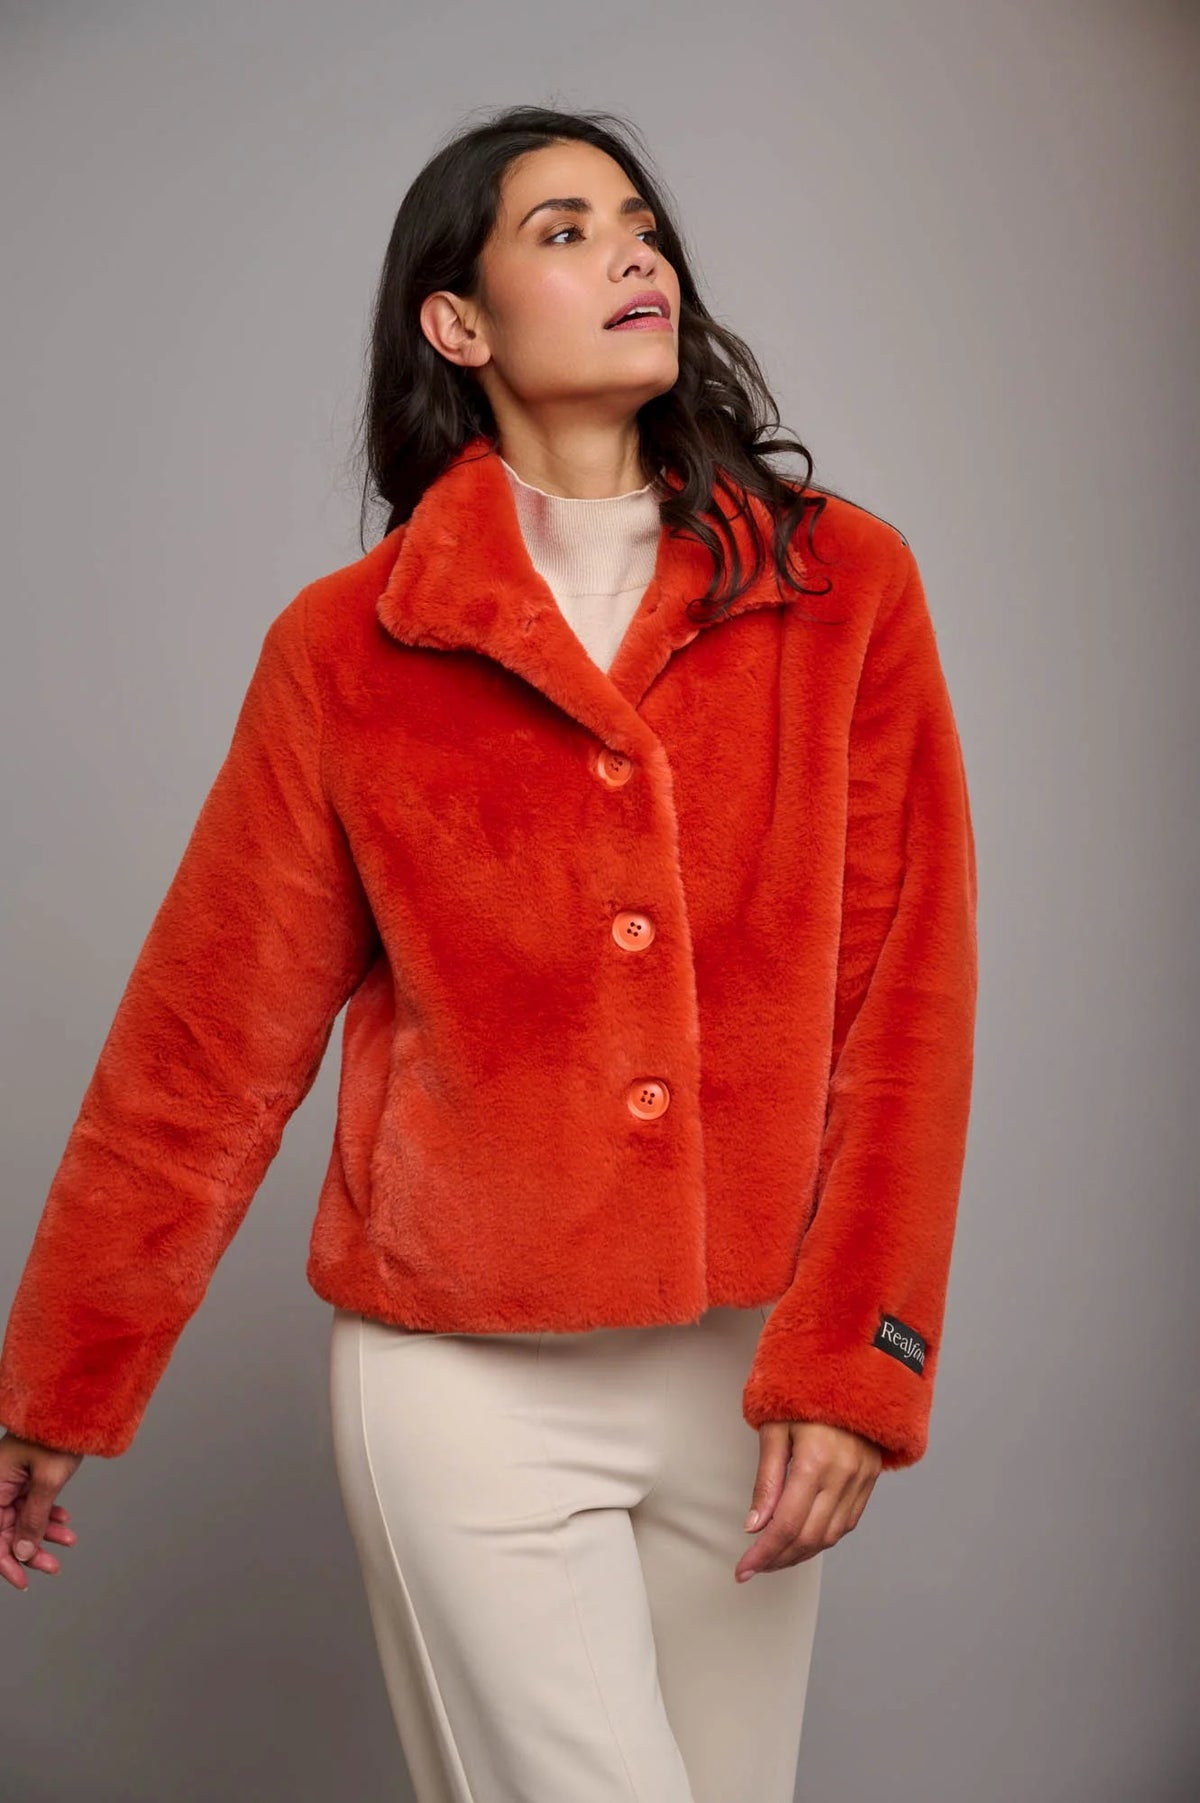 Terracotta orange short faux fur jacket with classic collar